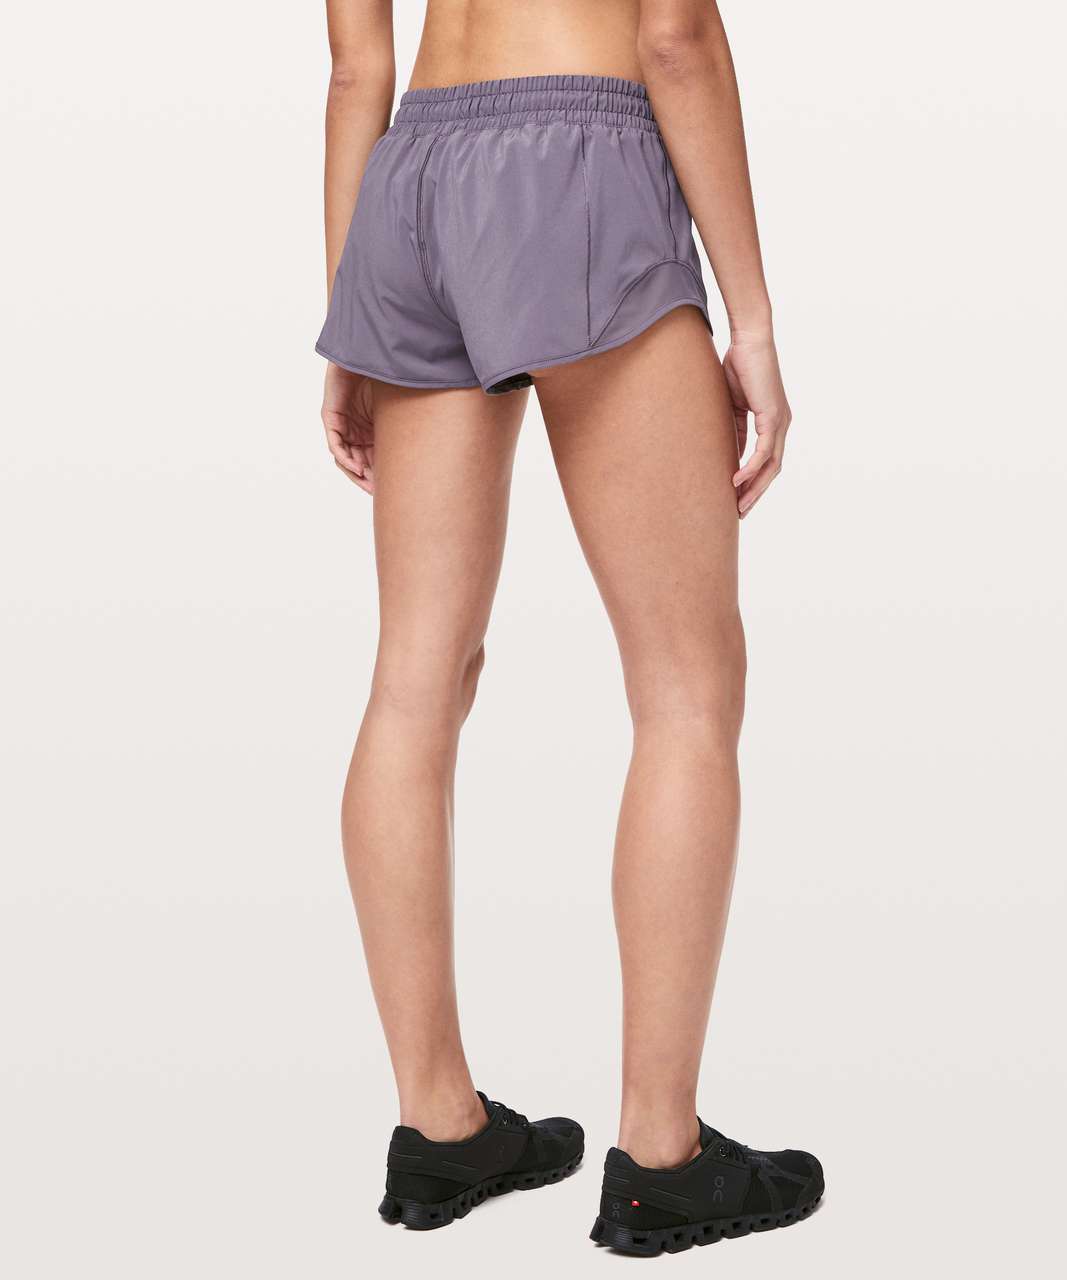 light purple lululemon shorts